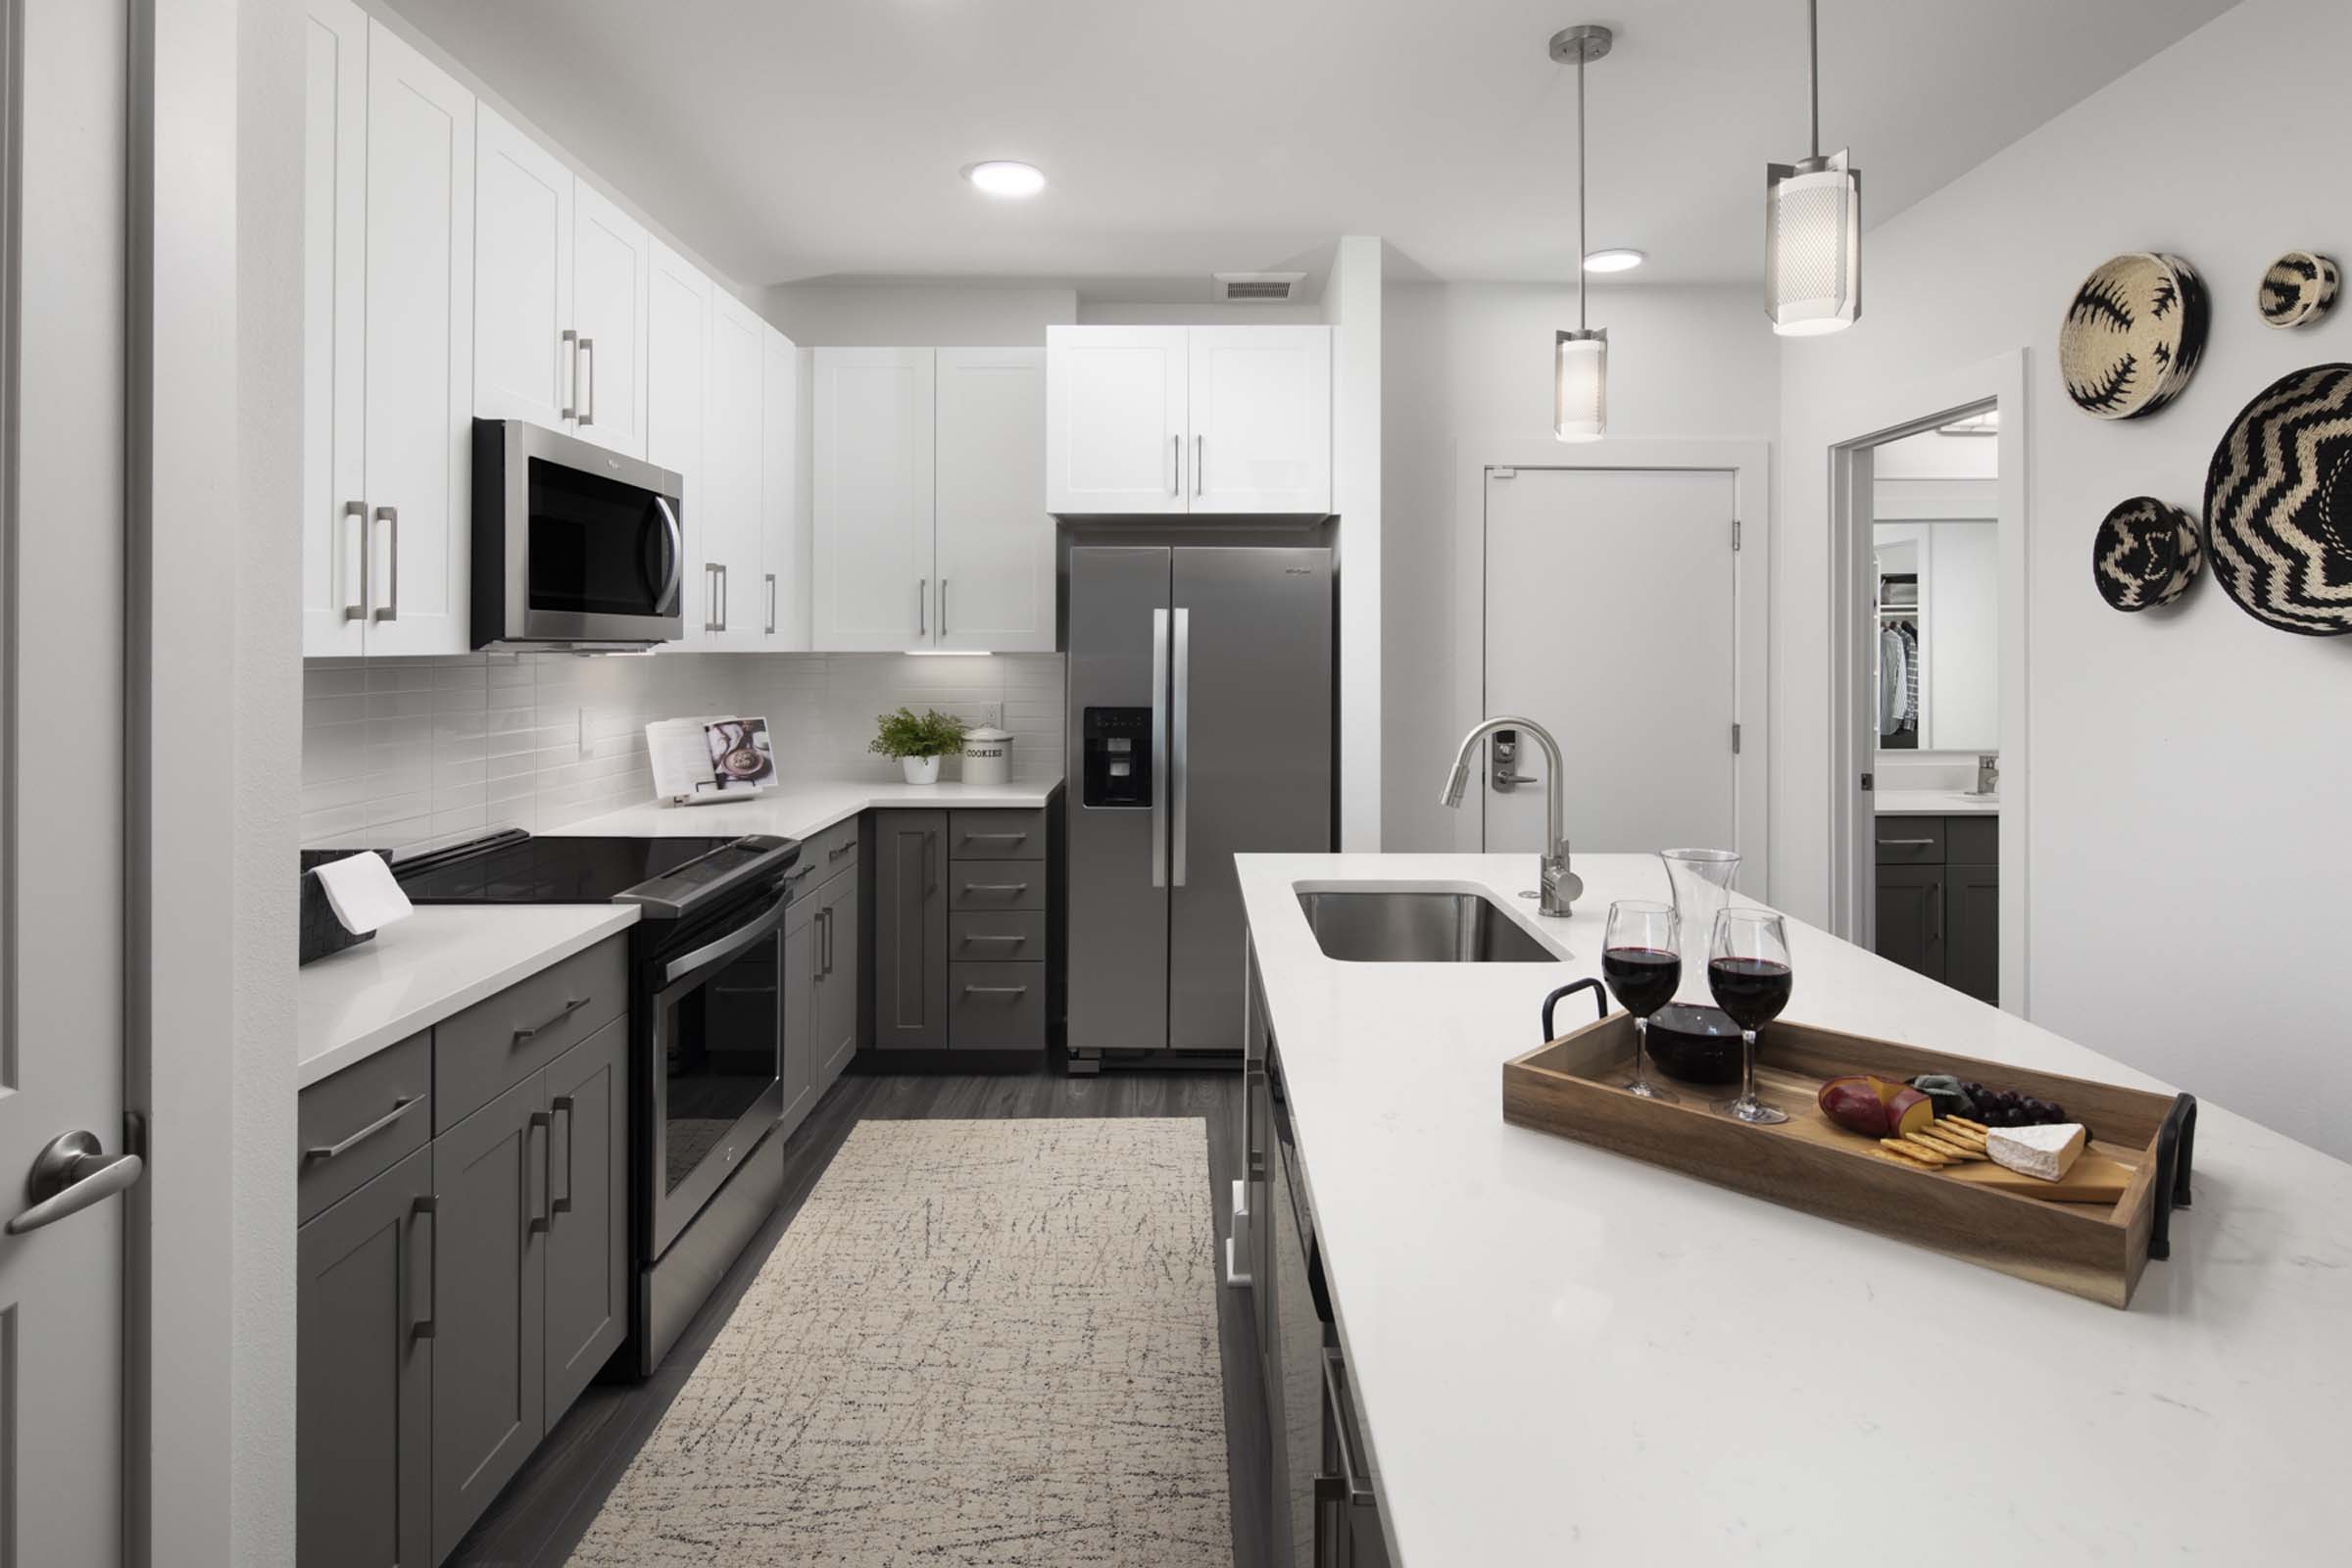 Desert modern style kitchen island with stainless steel appliances and gray vein quartz countertops